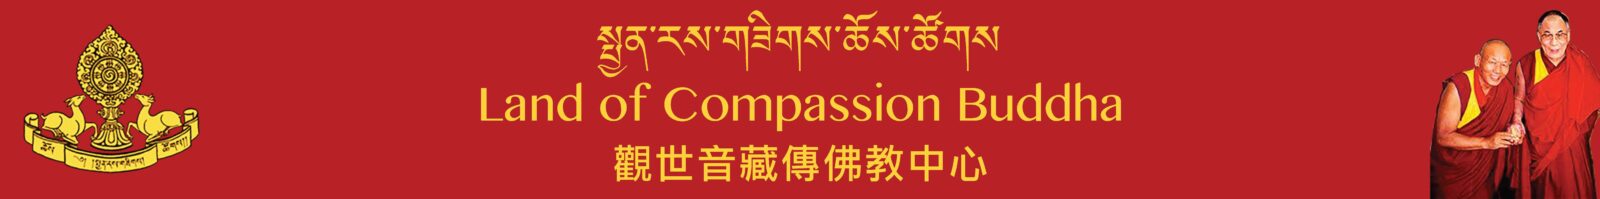 Land of Compassion Buddha Logo